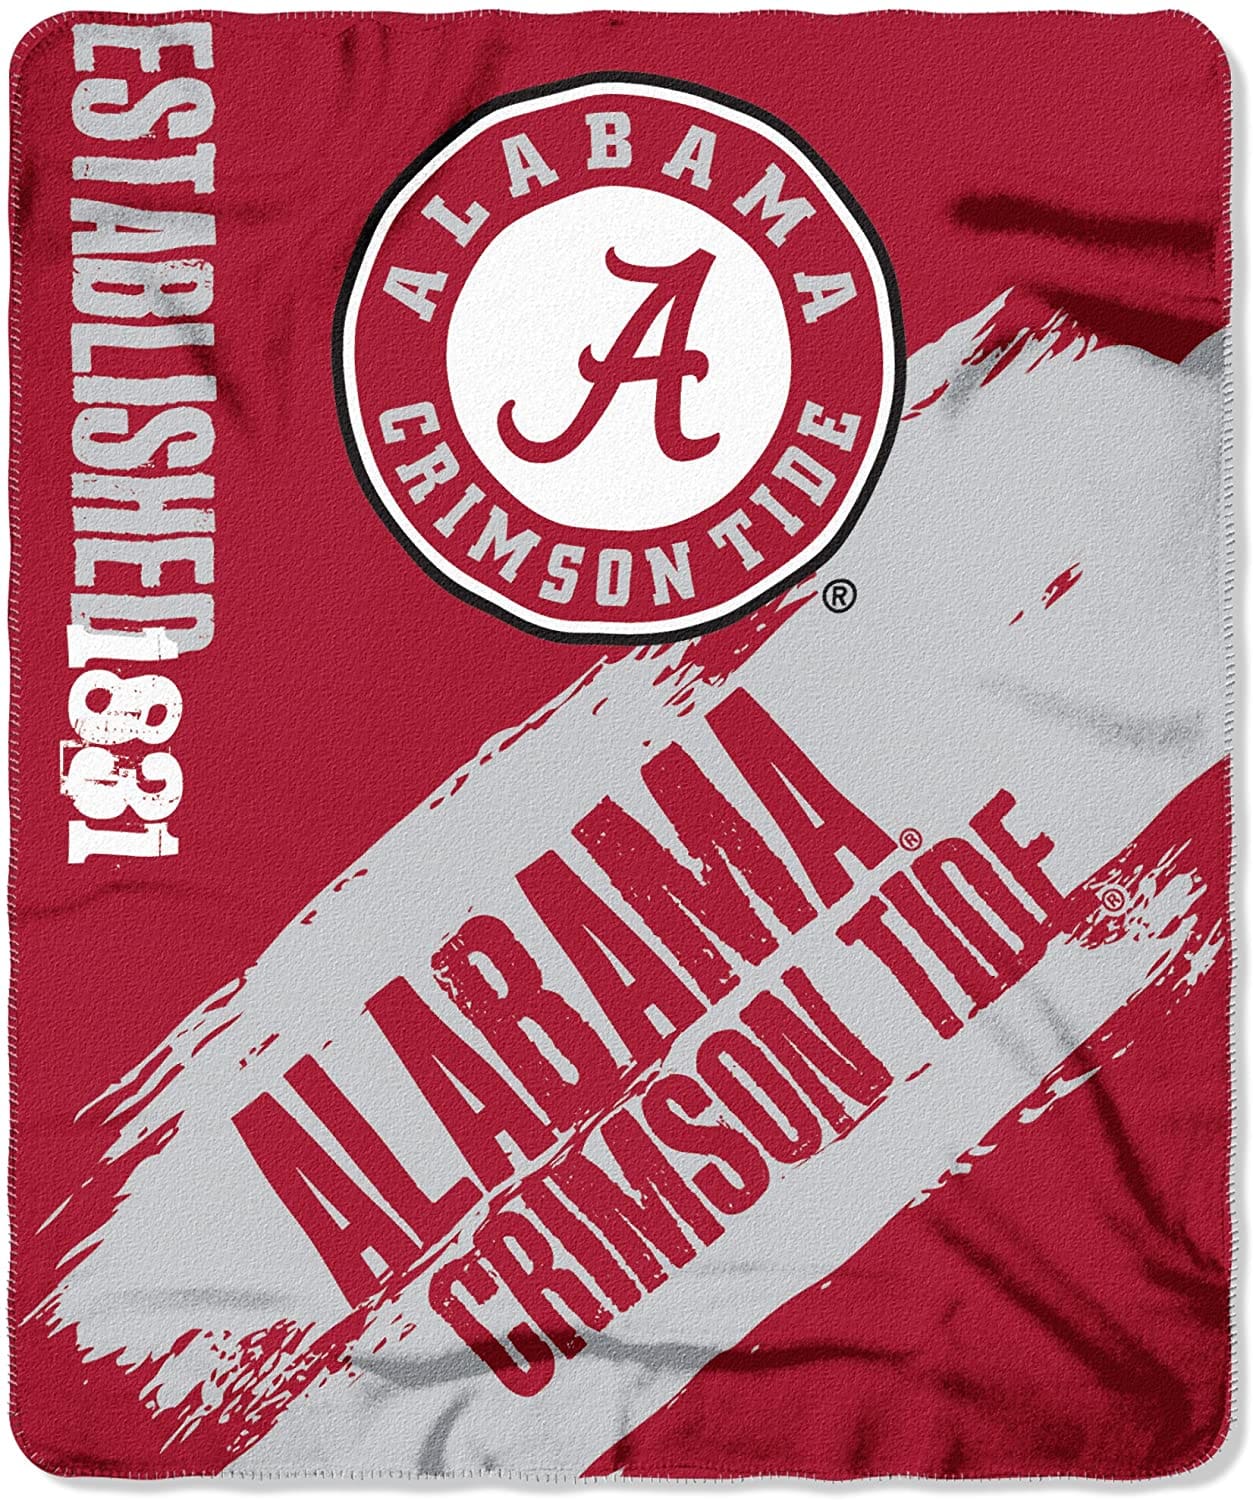 Officially Licensed Ncaa Printed Throw Alabama Crimson Tide Fleece Blanket